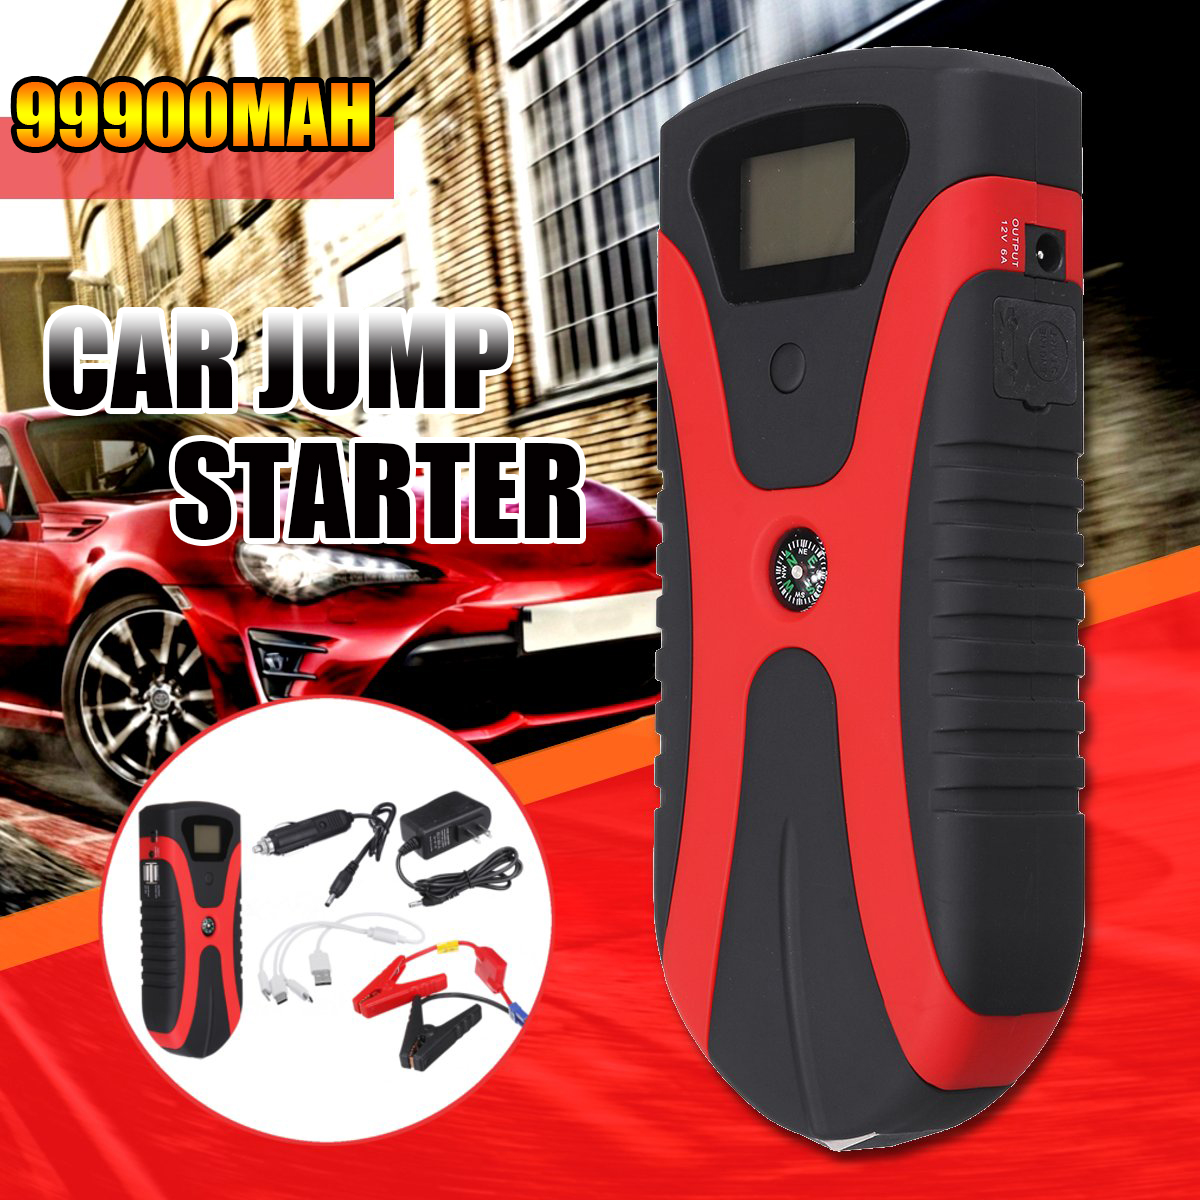 99900mAh-Portable-Multi-Function-Car-Jump-Starter-Emergency-Light-Battery-Charger-1555947-2